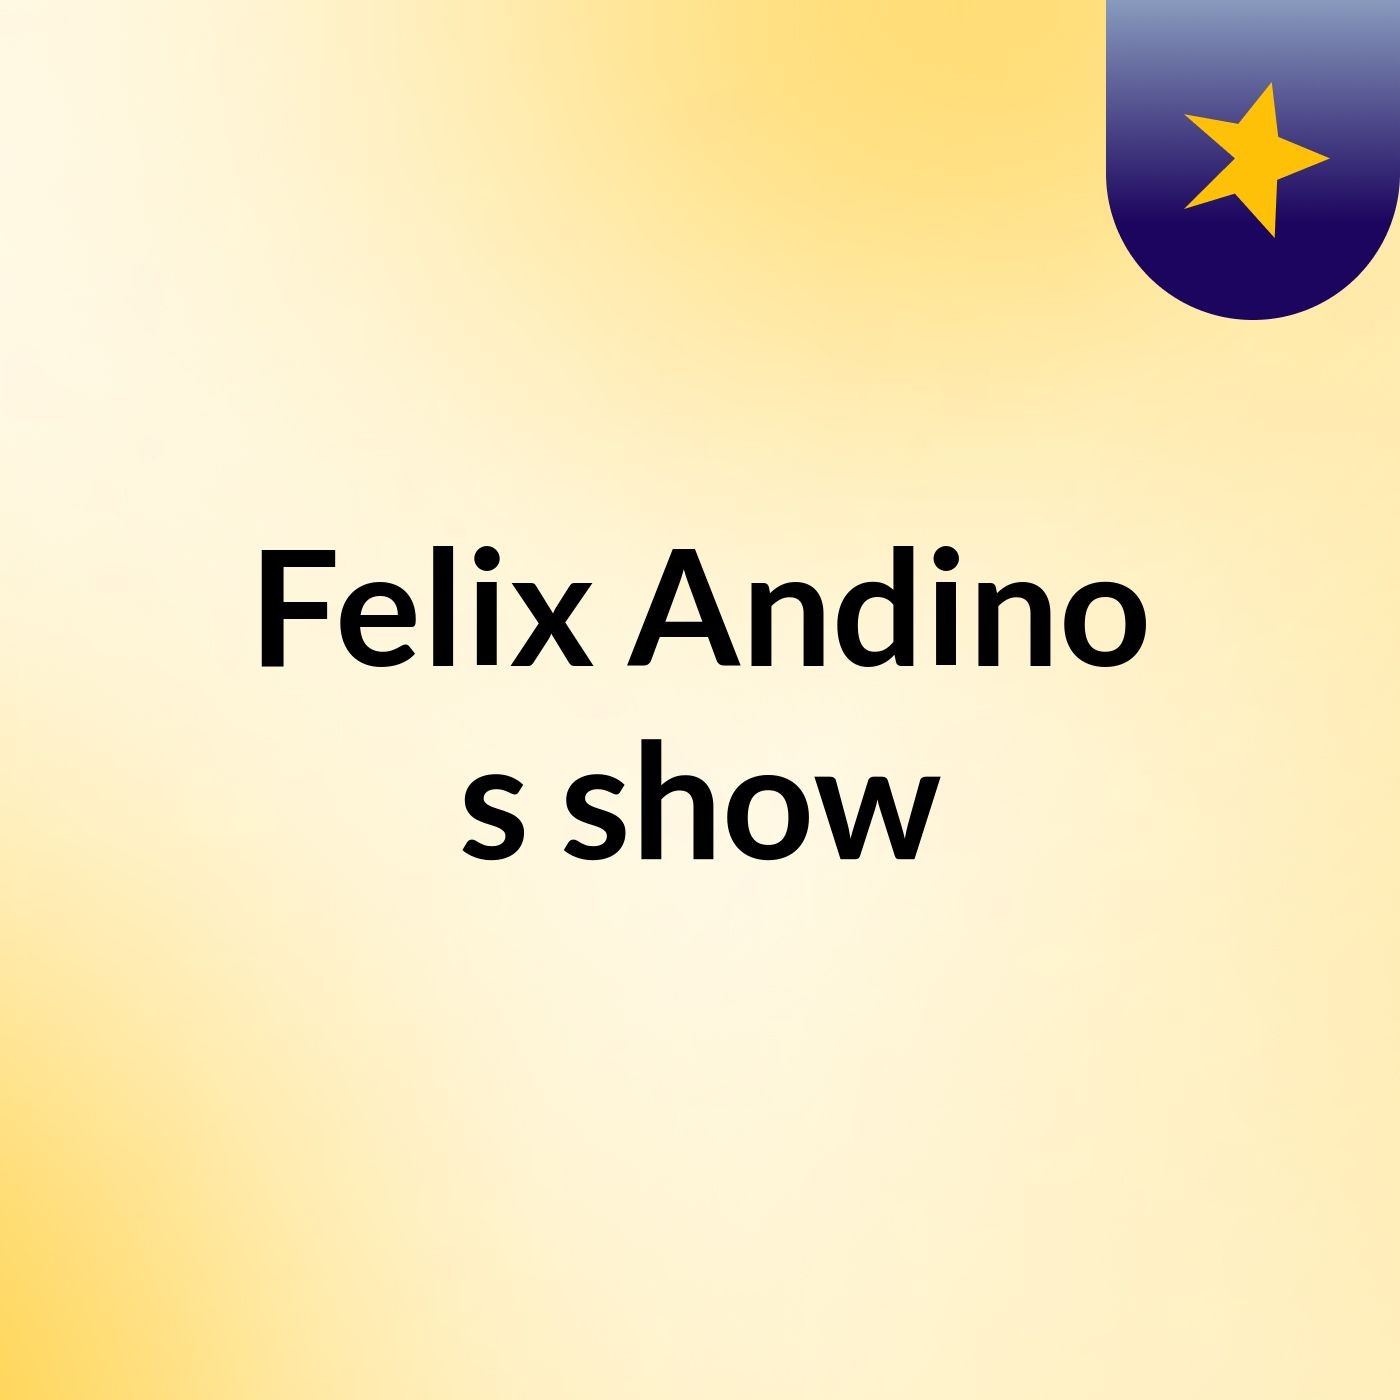 Felix Andino's show